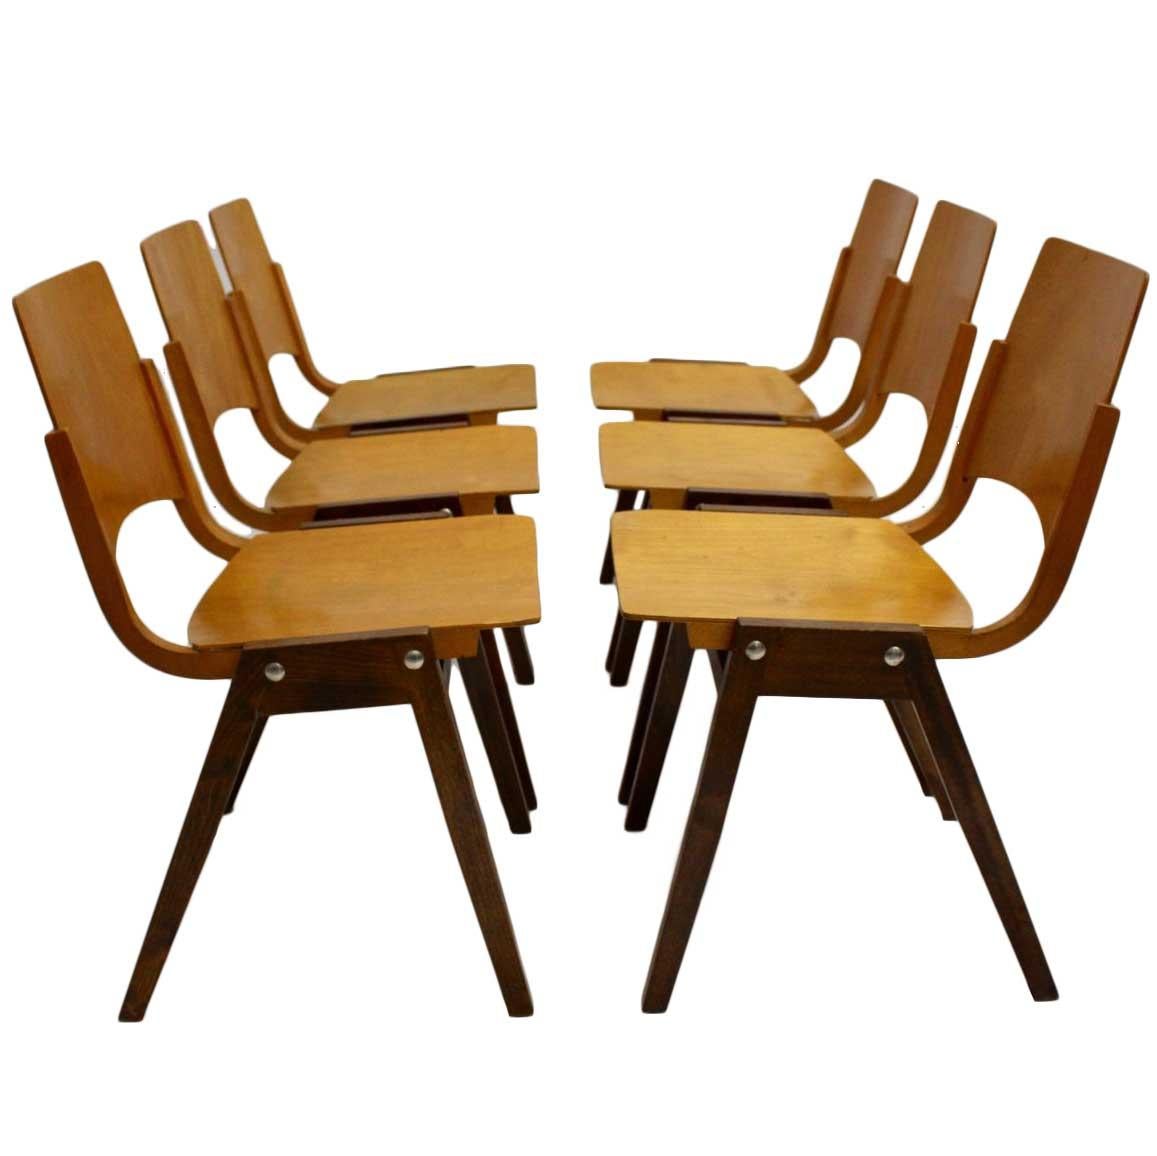 Mid-Century Modern Beech Bicolor Dining Room Chairs Roland Rainer Austria 1952